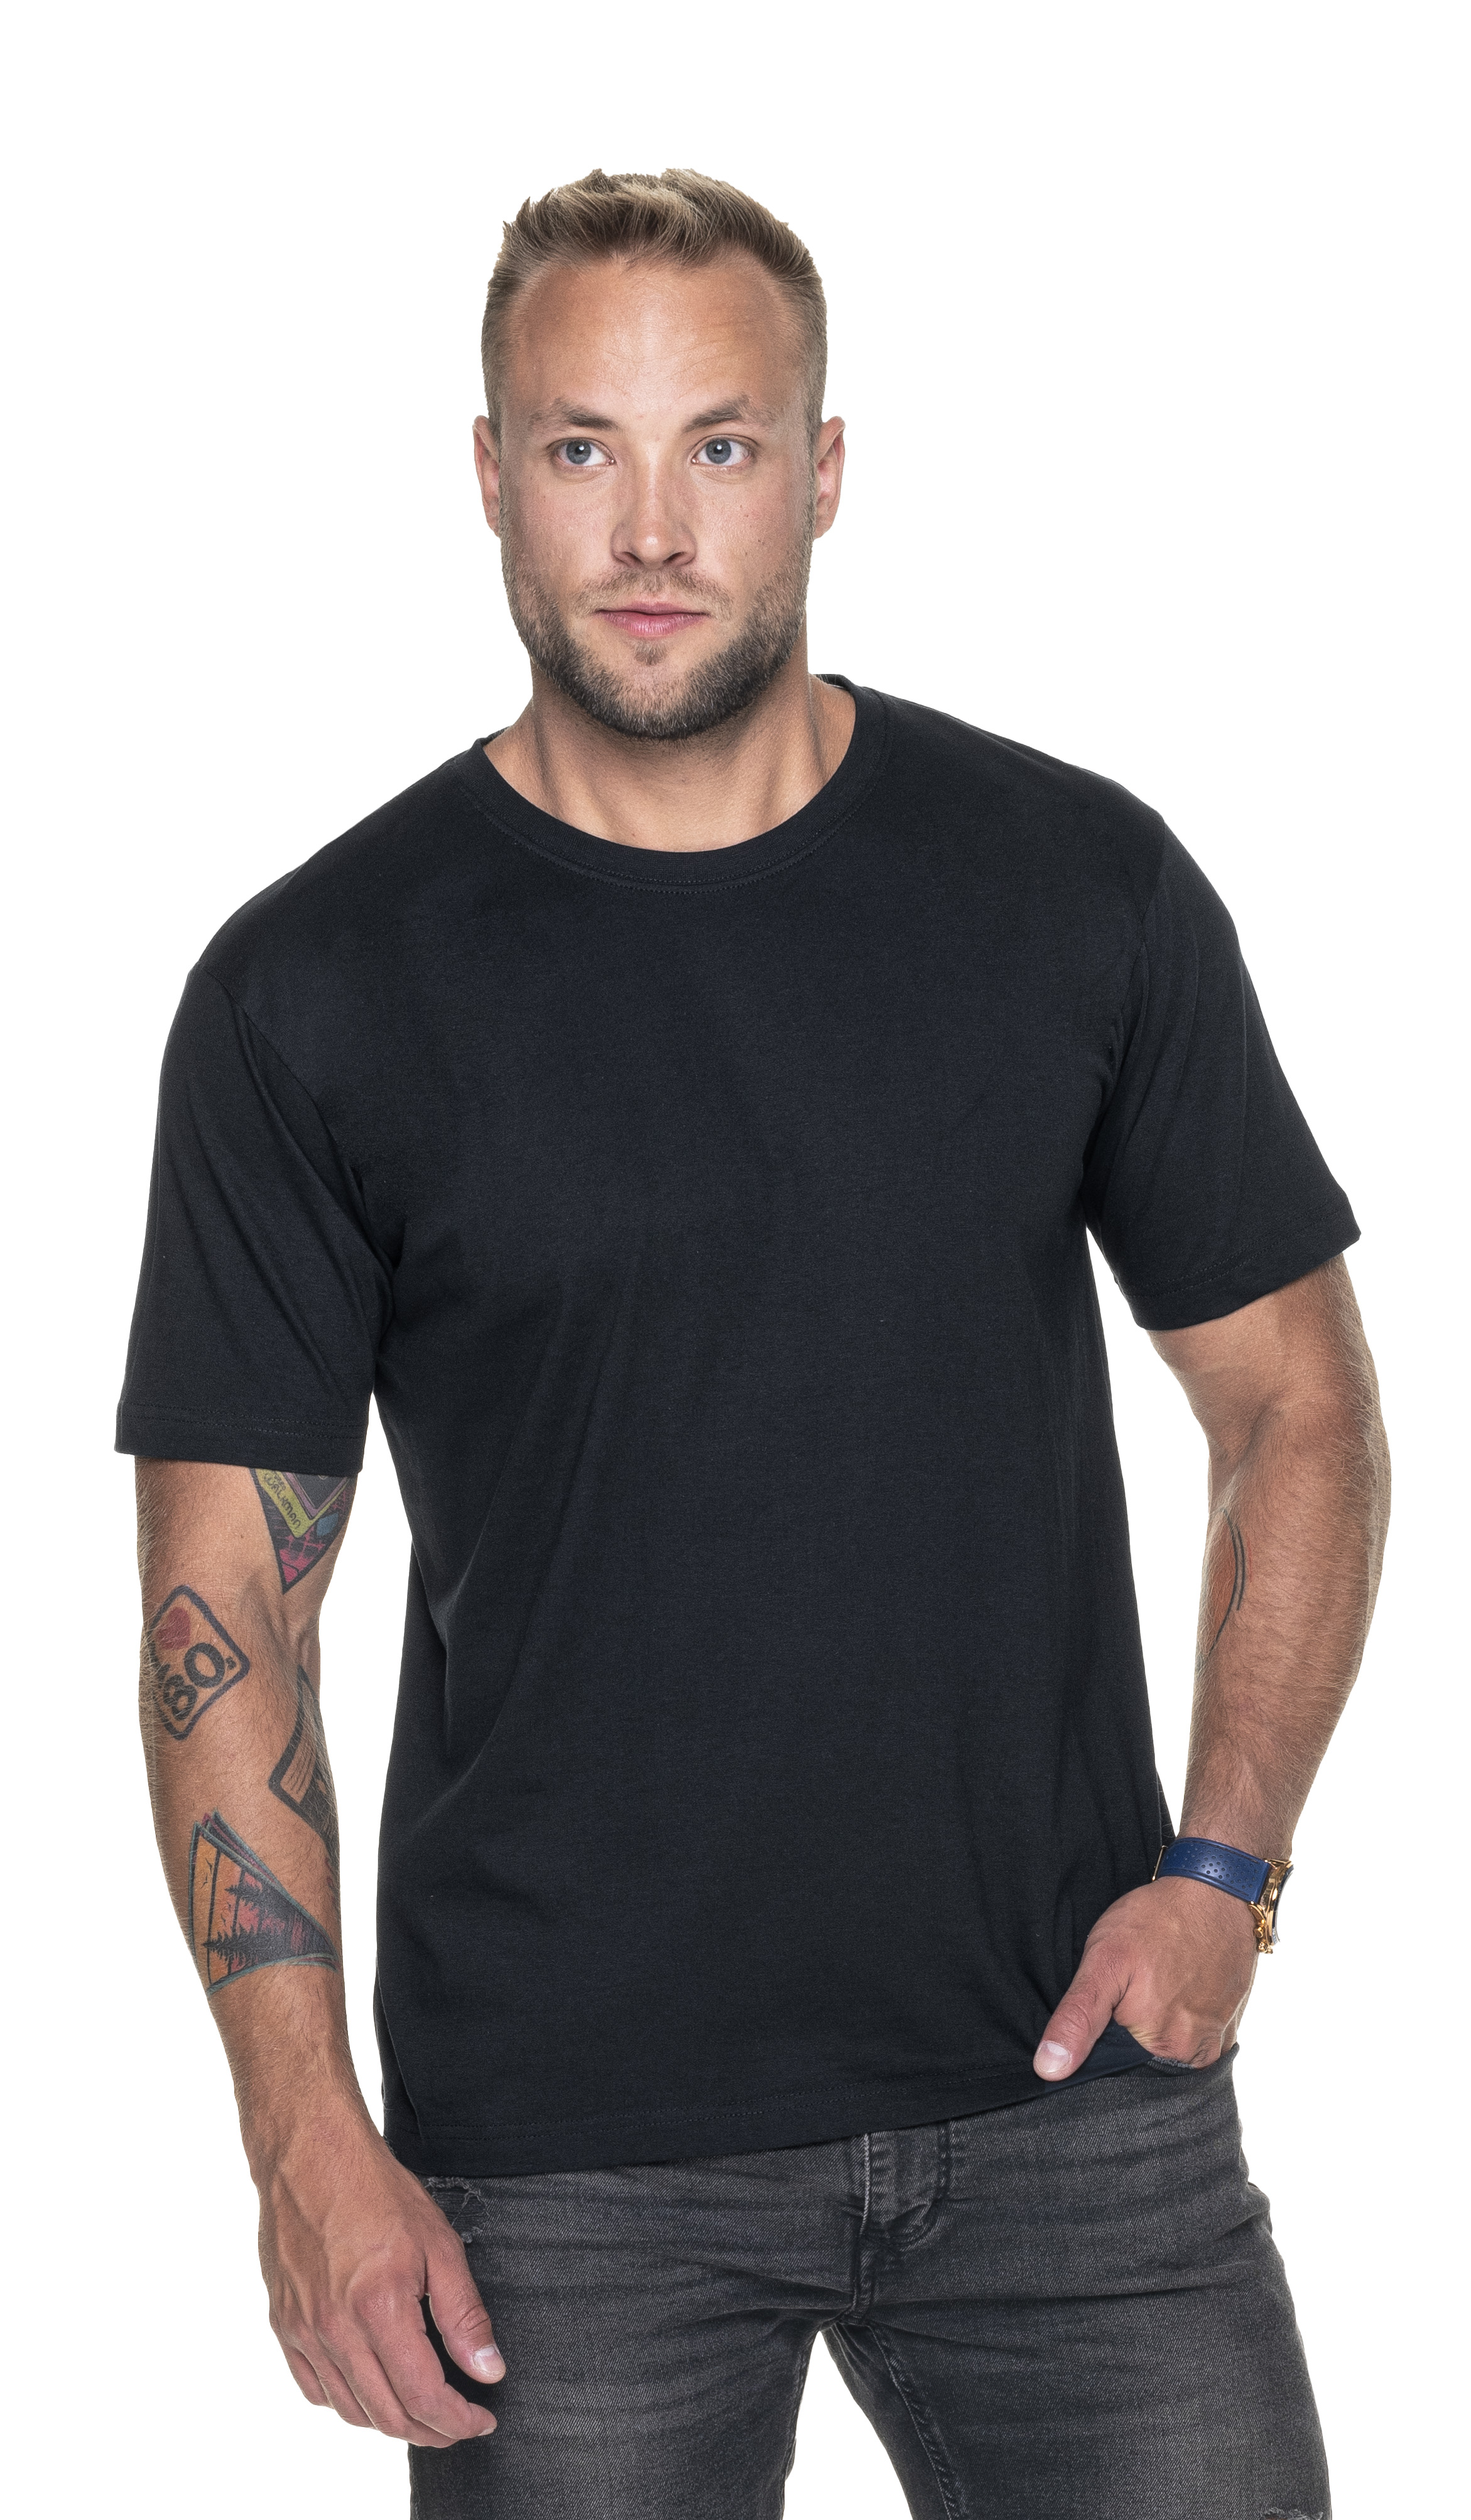 Koszulka Promostars Premium - czarna